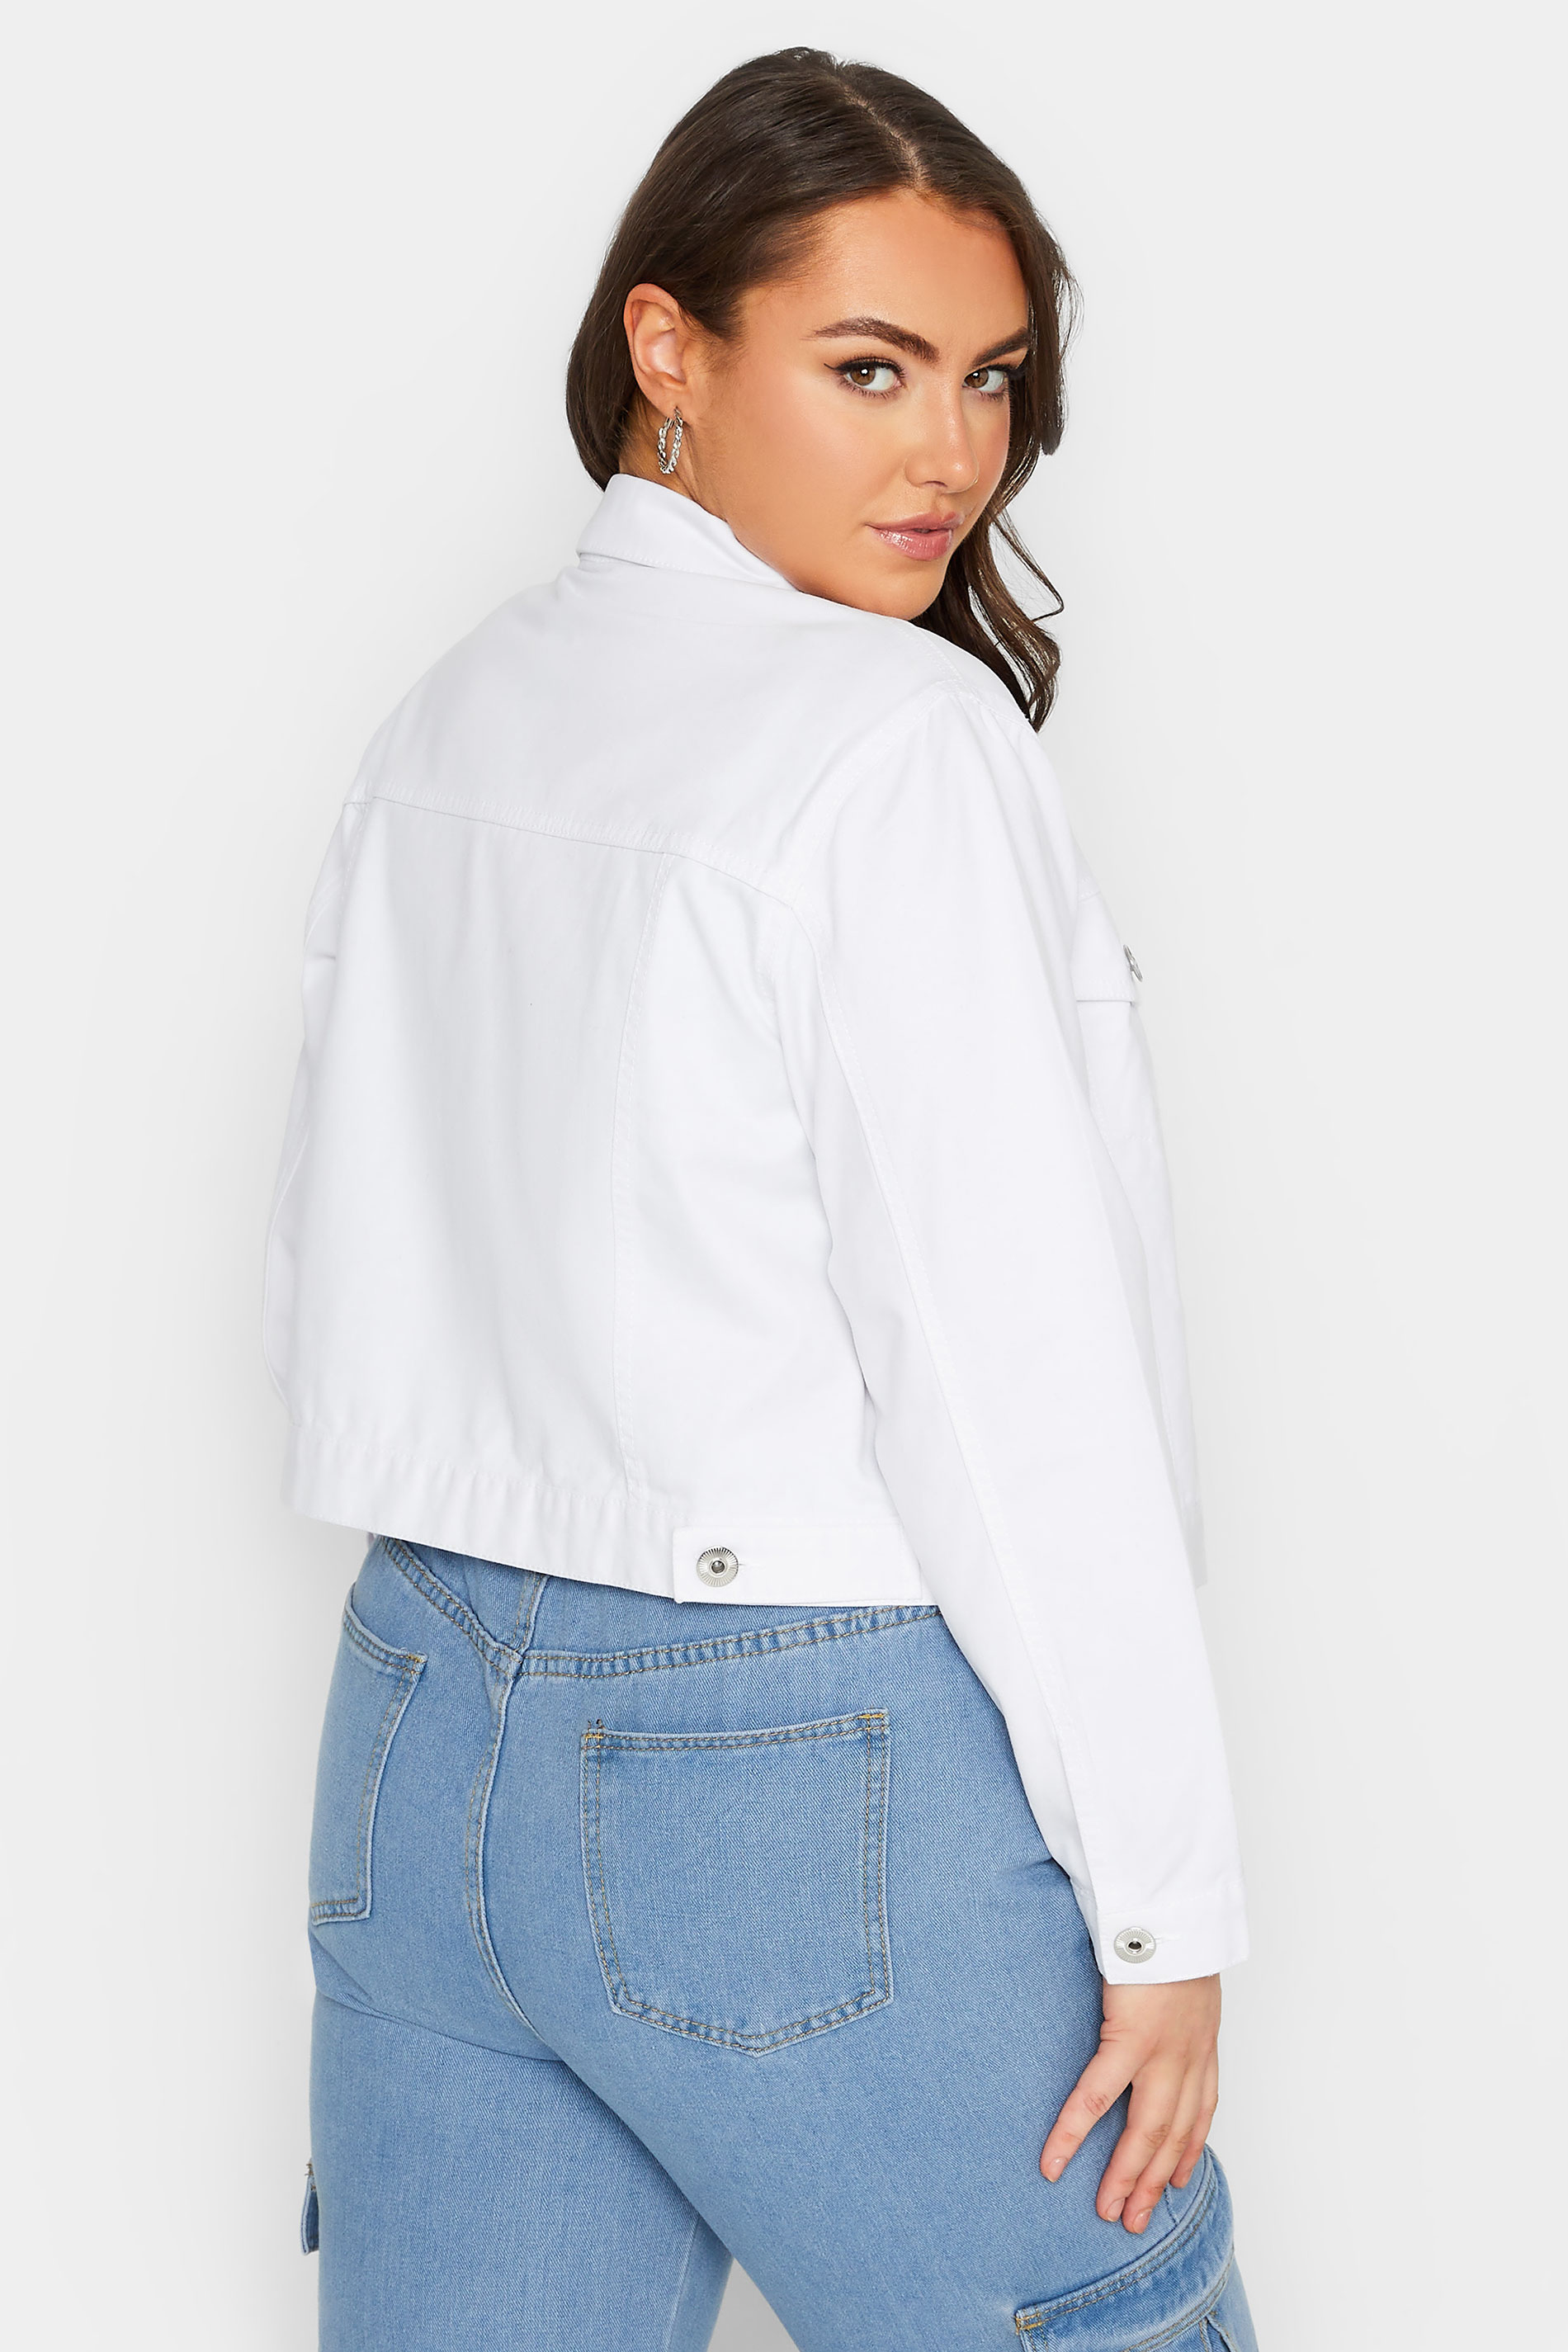 YOURS Plus Size Curve White Denim Jacket | Yours Clothing  3